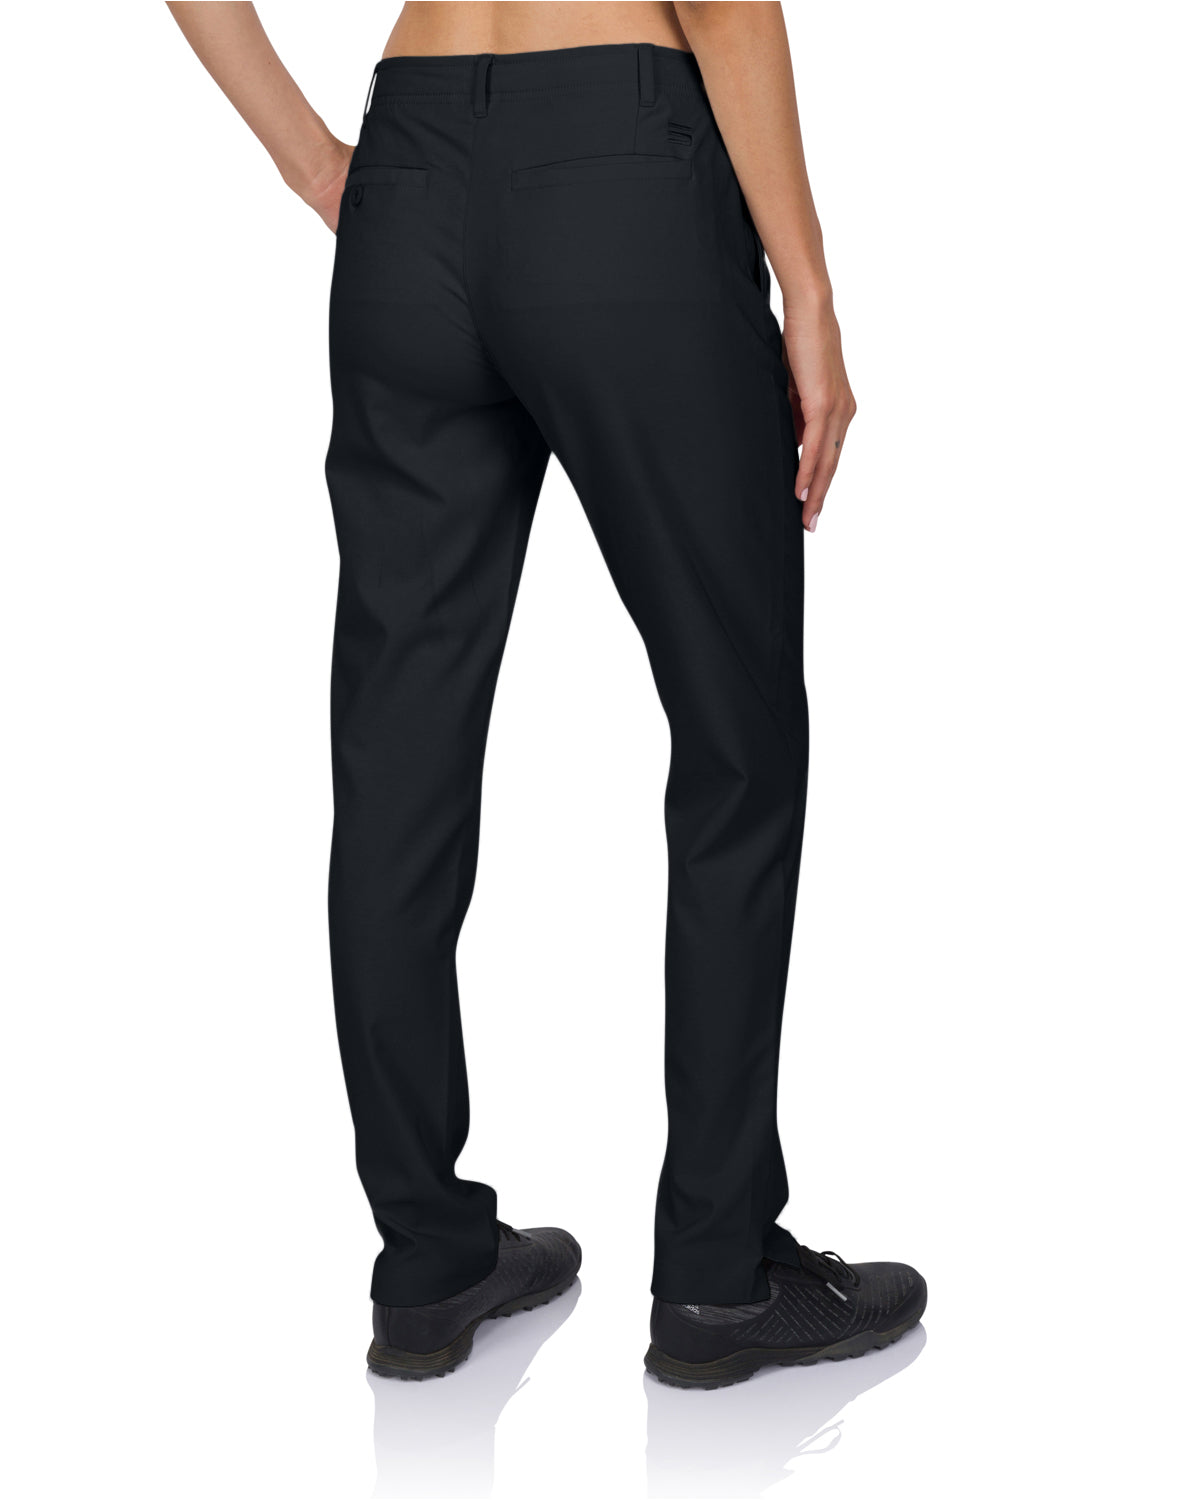 Women’s Quick Dry Golf Pants - Lightweight w/ 4-Way Stretch Fabric.  Moisture Wicking, Anti-Odor Tech, UPF 50+ Sun Protection